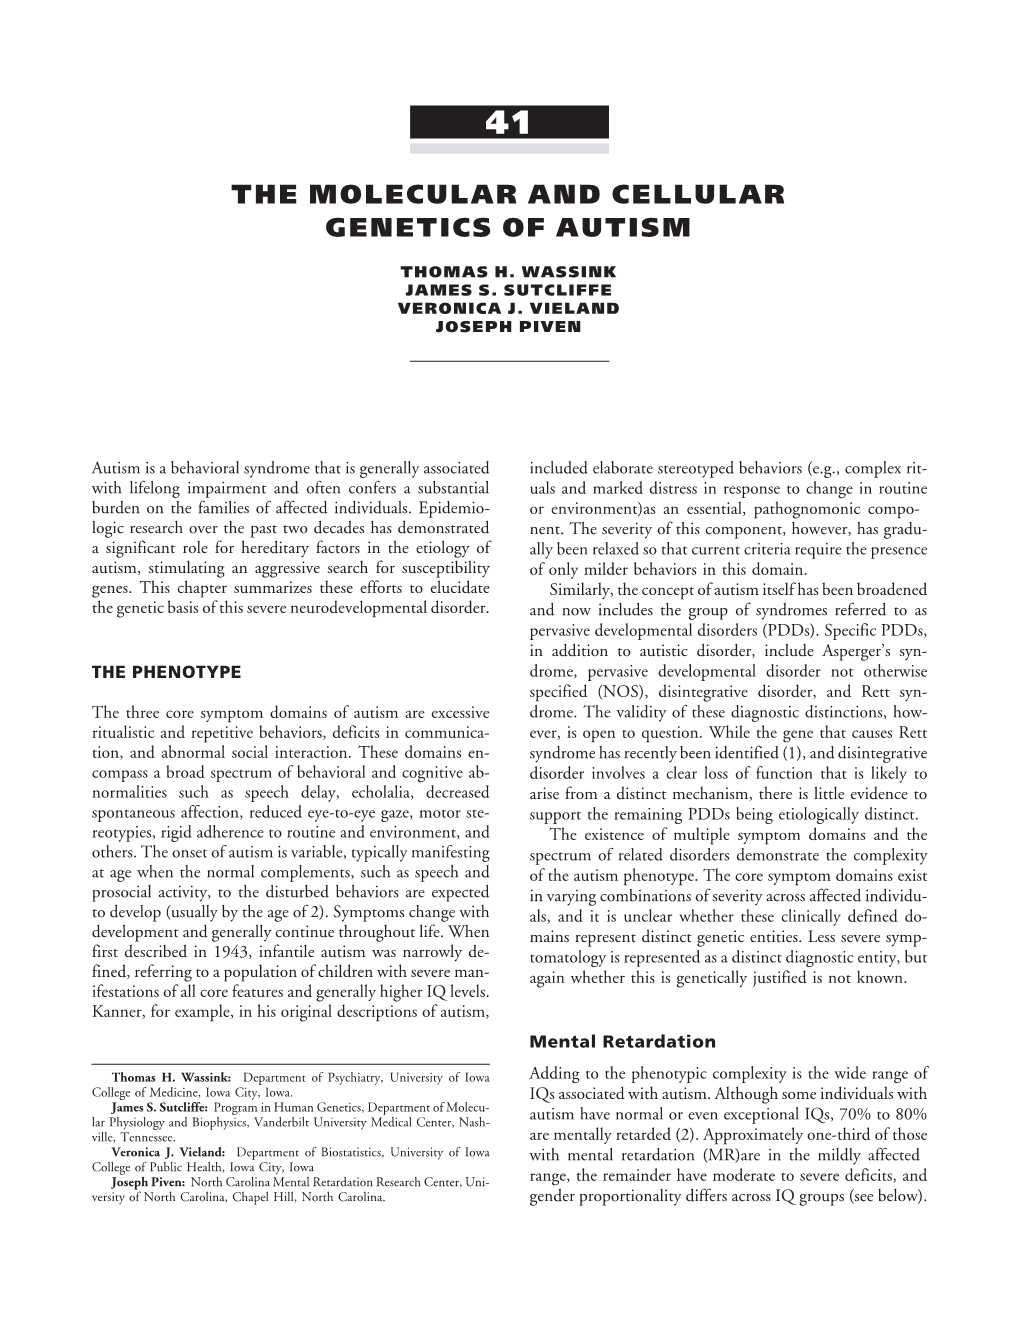 The Molecular and Cellular Genetics of Autism (PDF)